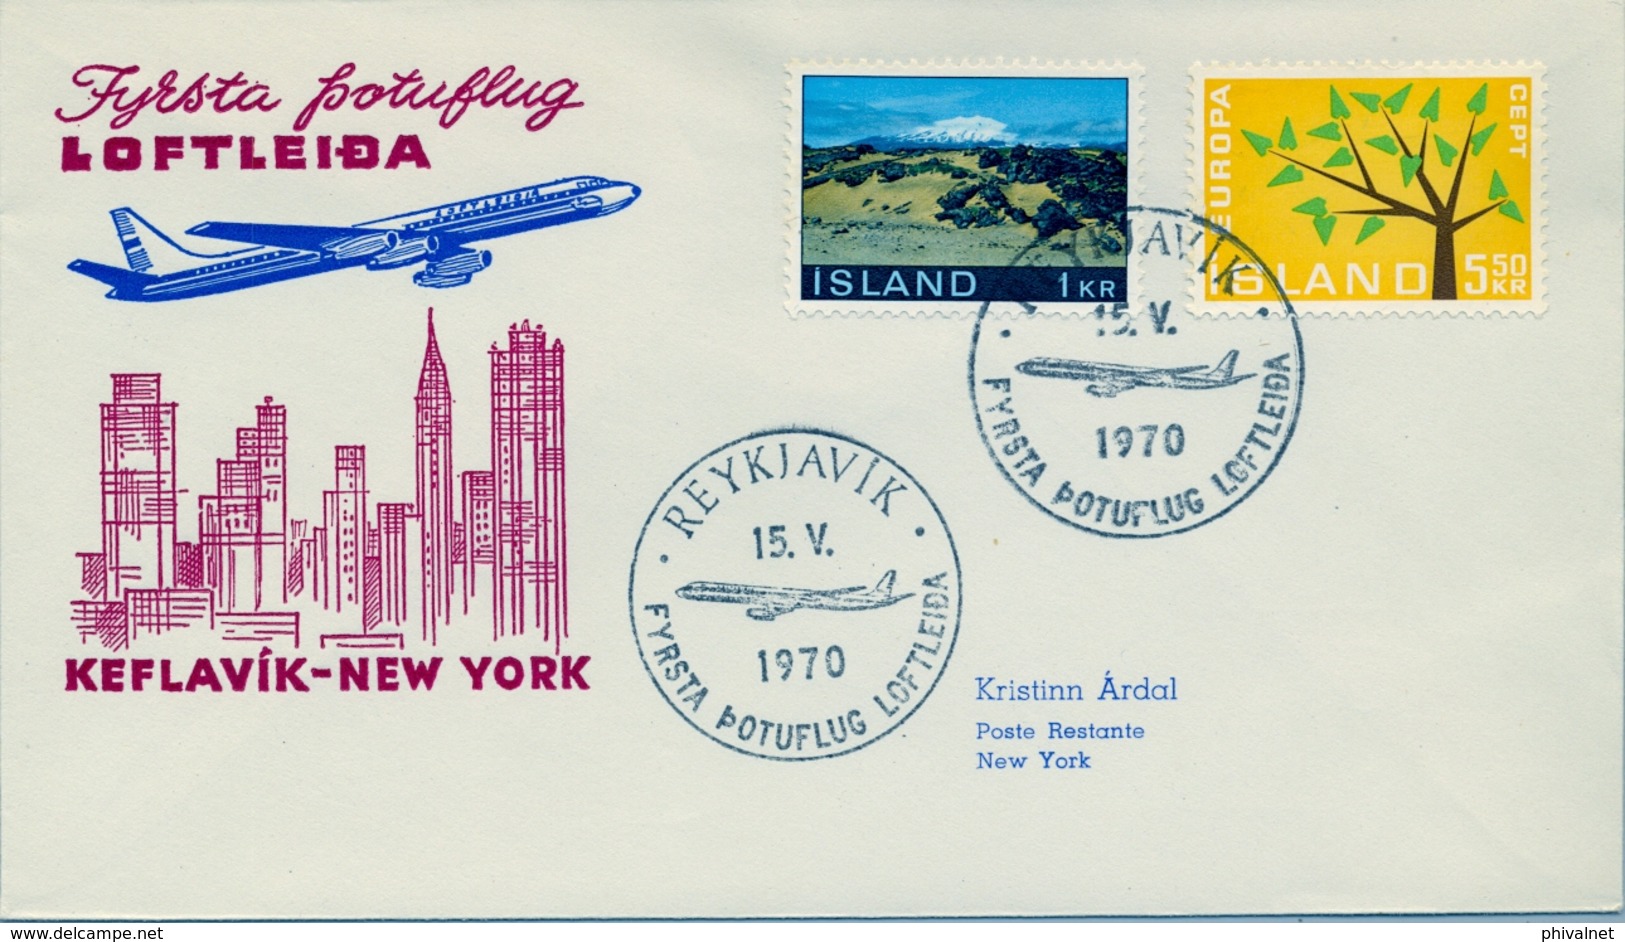 1970 , ISLANDIA , PRIMER VUELO LOFTLEIDA , REYKJAVIK - NEW YORK , KEFLAVIK AIRPORT - Covers & Documents